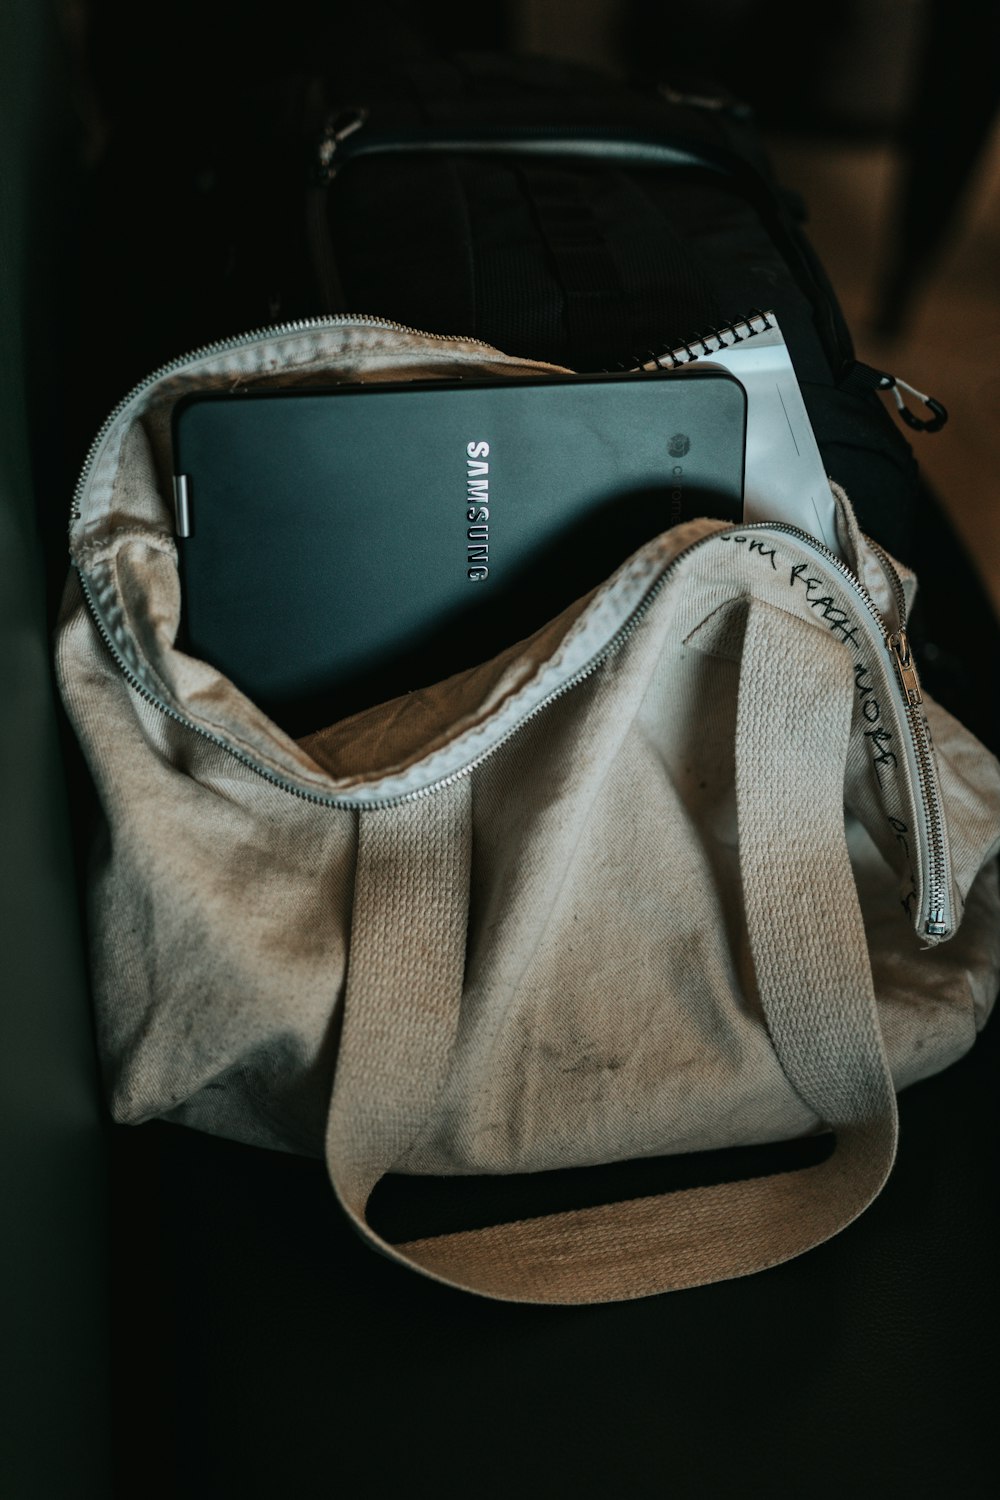 black Samsung laptop in brown bag